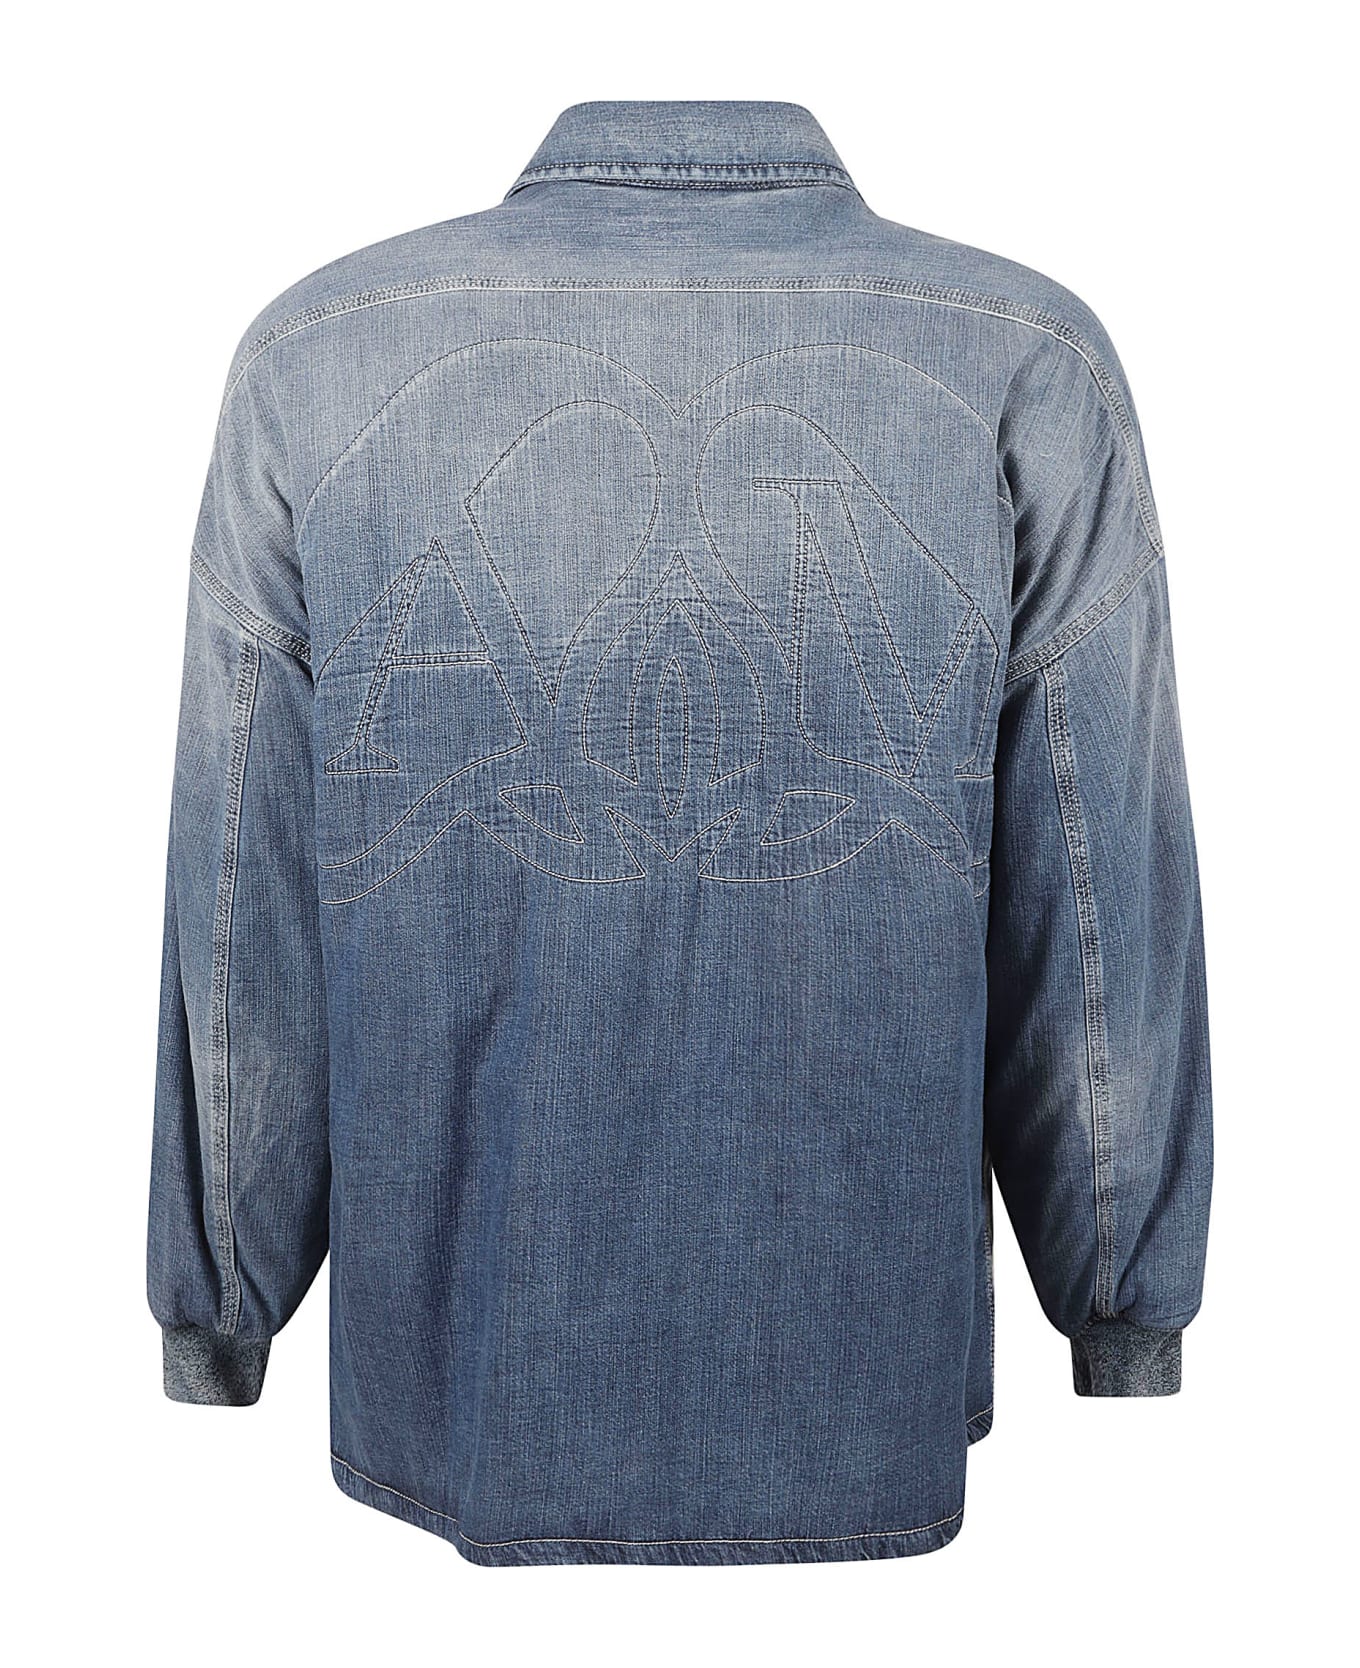 Alexander McQueen Quilted Denim Shirt - Blue Washed